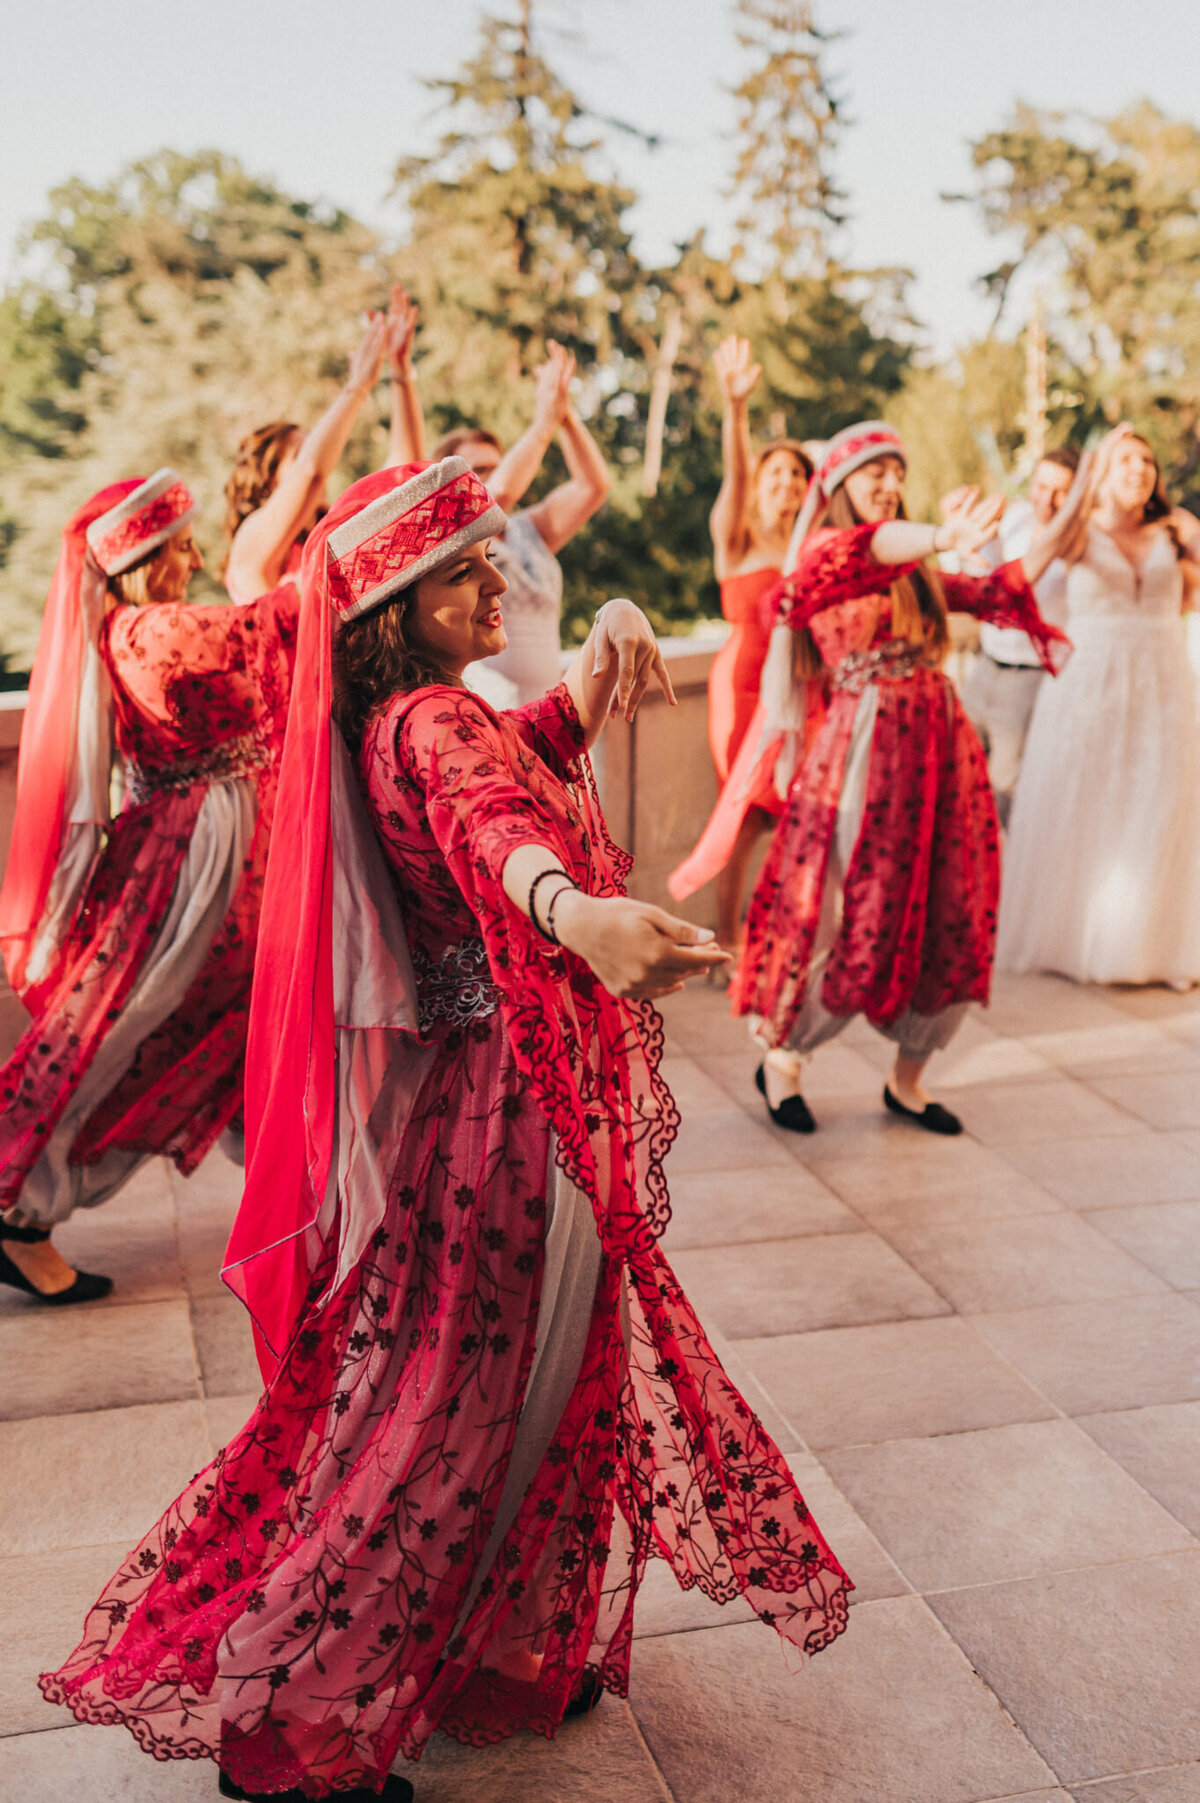 Performance of Typical Lebanese Folk Dance During a Destination Wedding